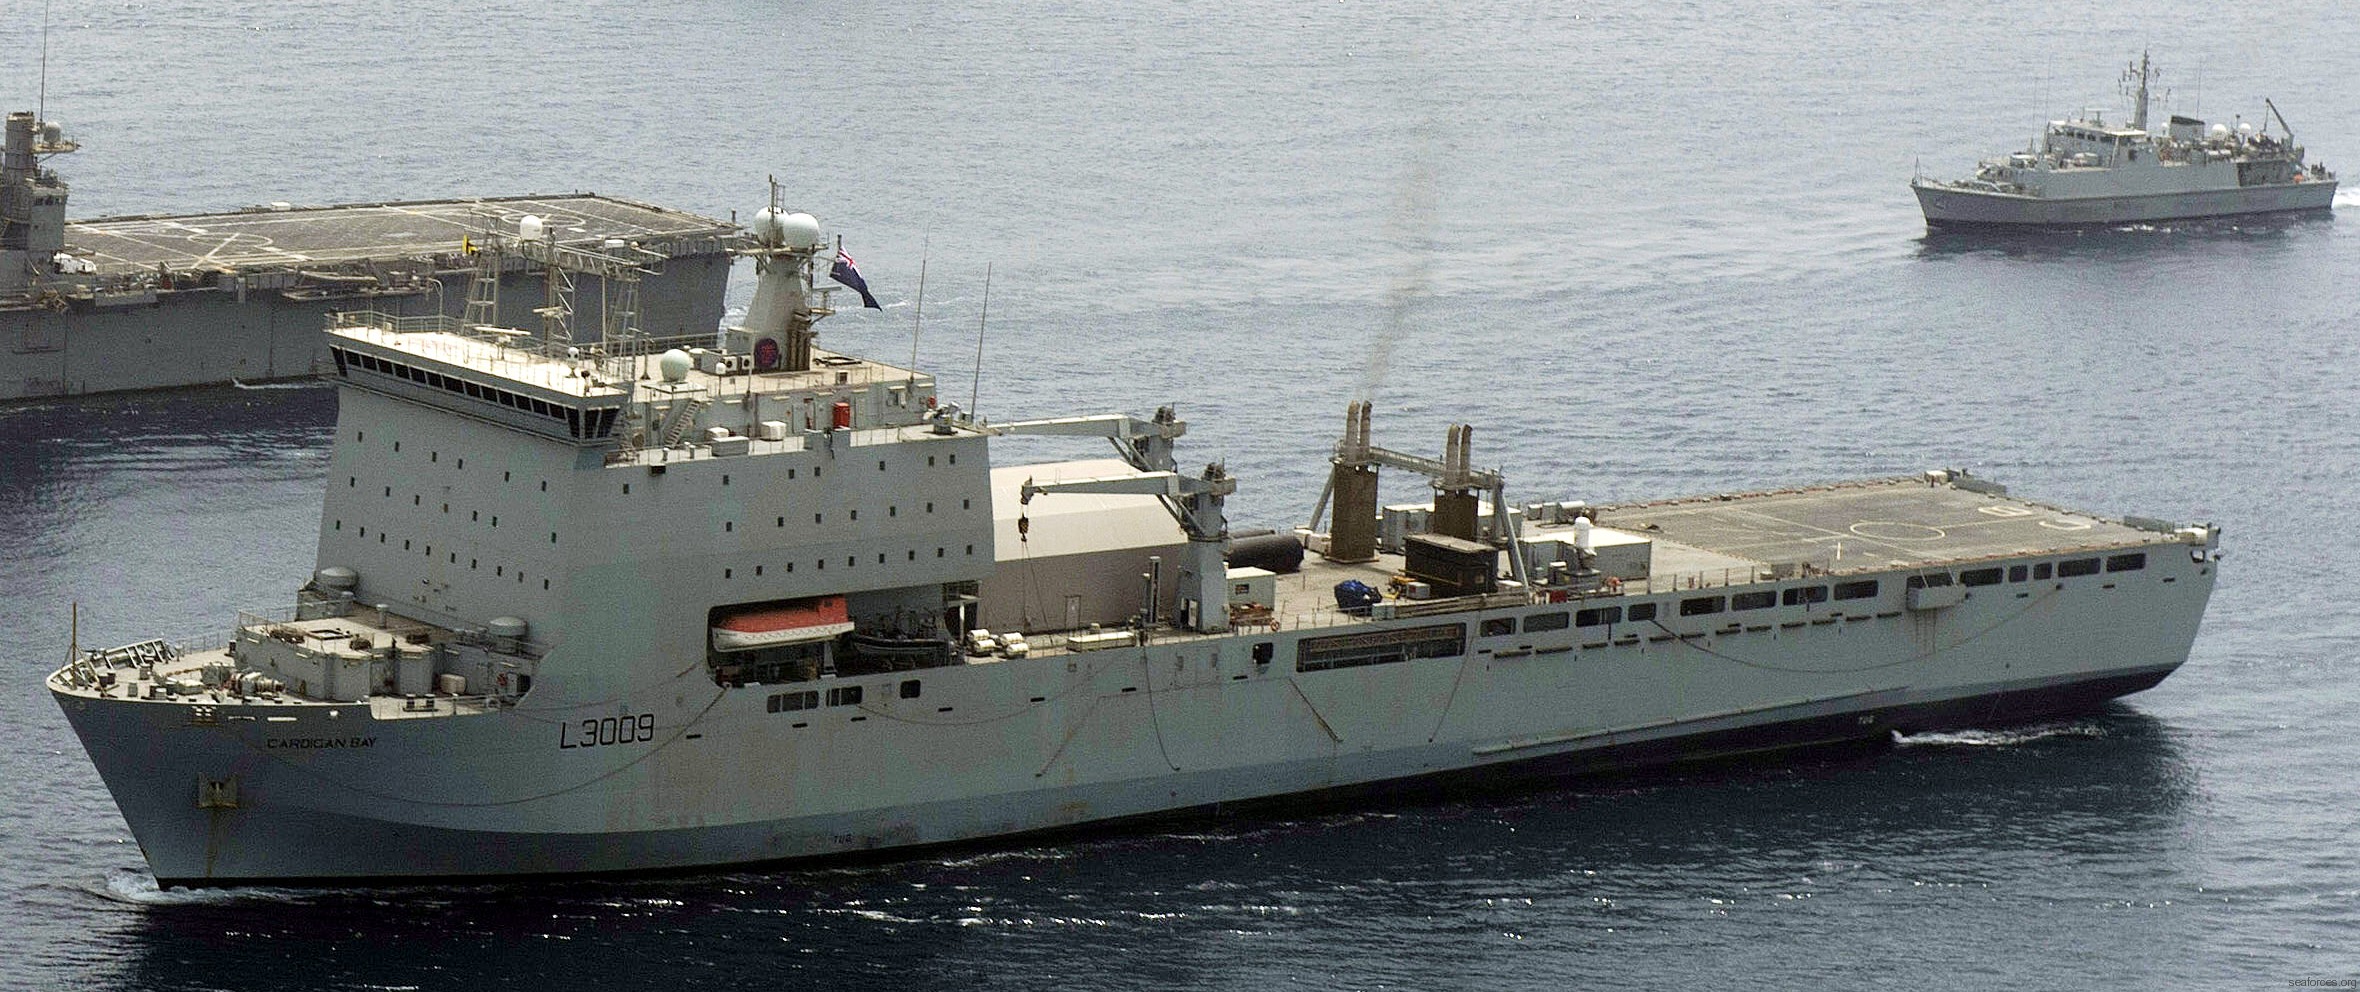 l-3009 rfa cardigan bay class dock landing ship lsd royal navy fleet auxilary 09